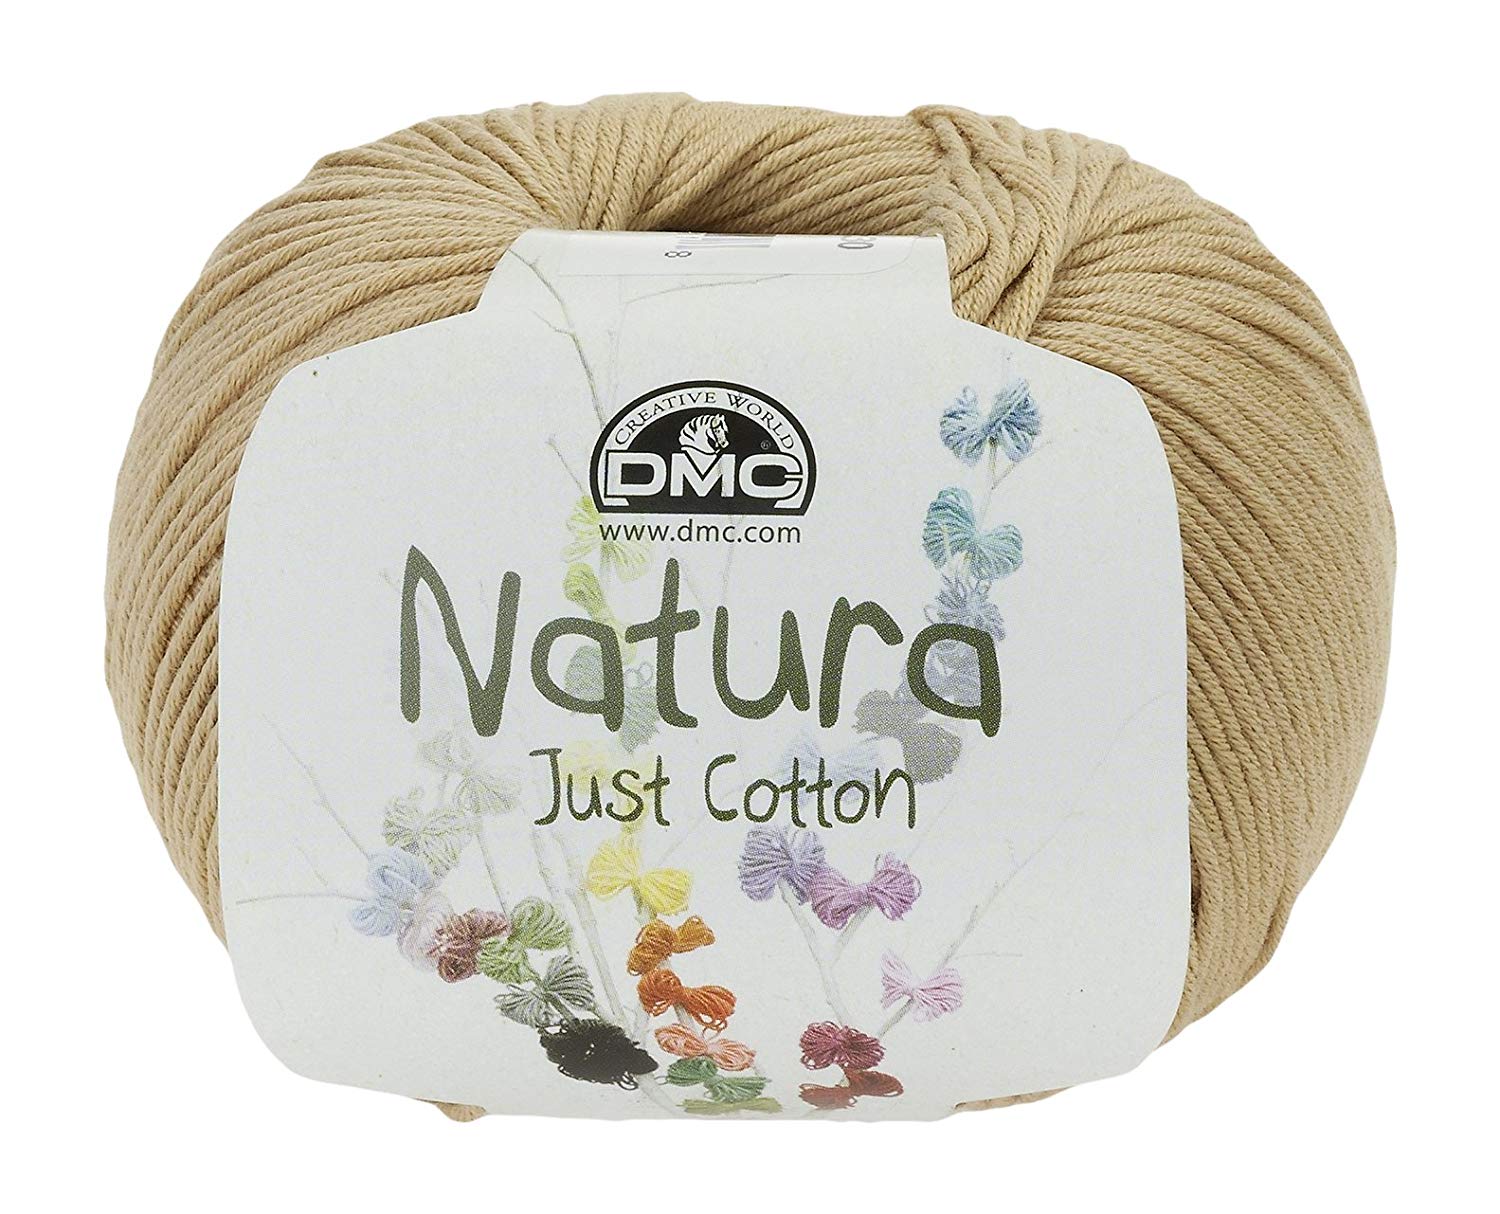 DMC Natura Just Cotton